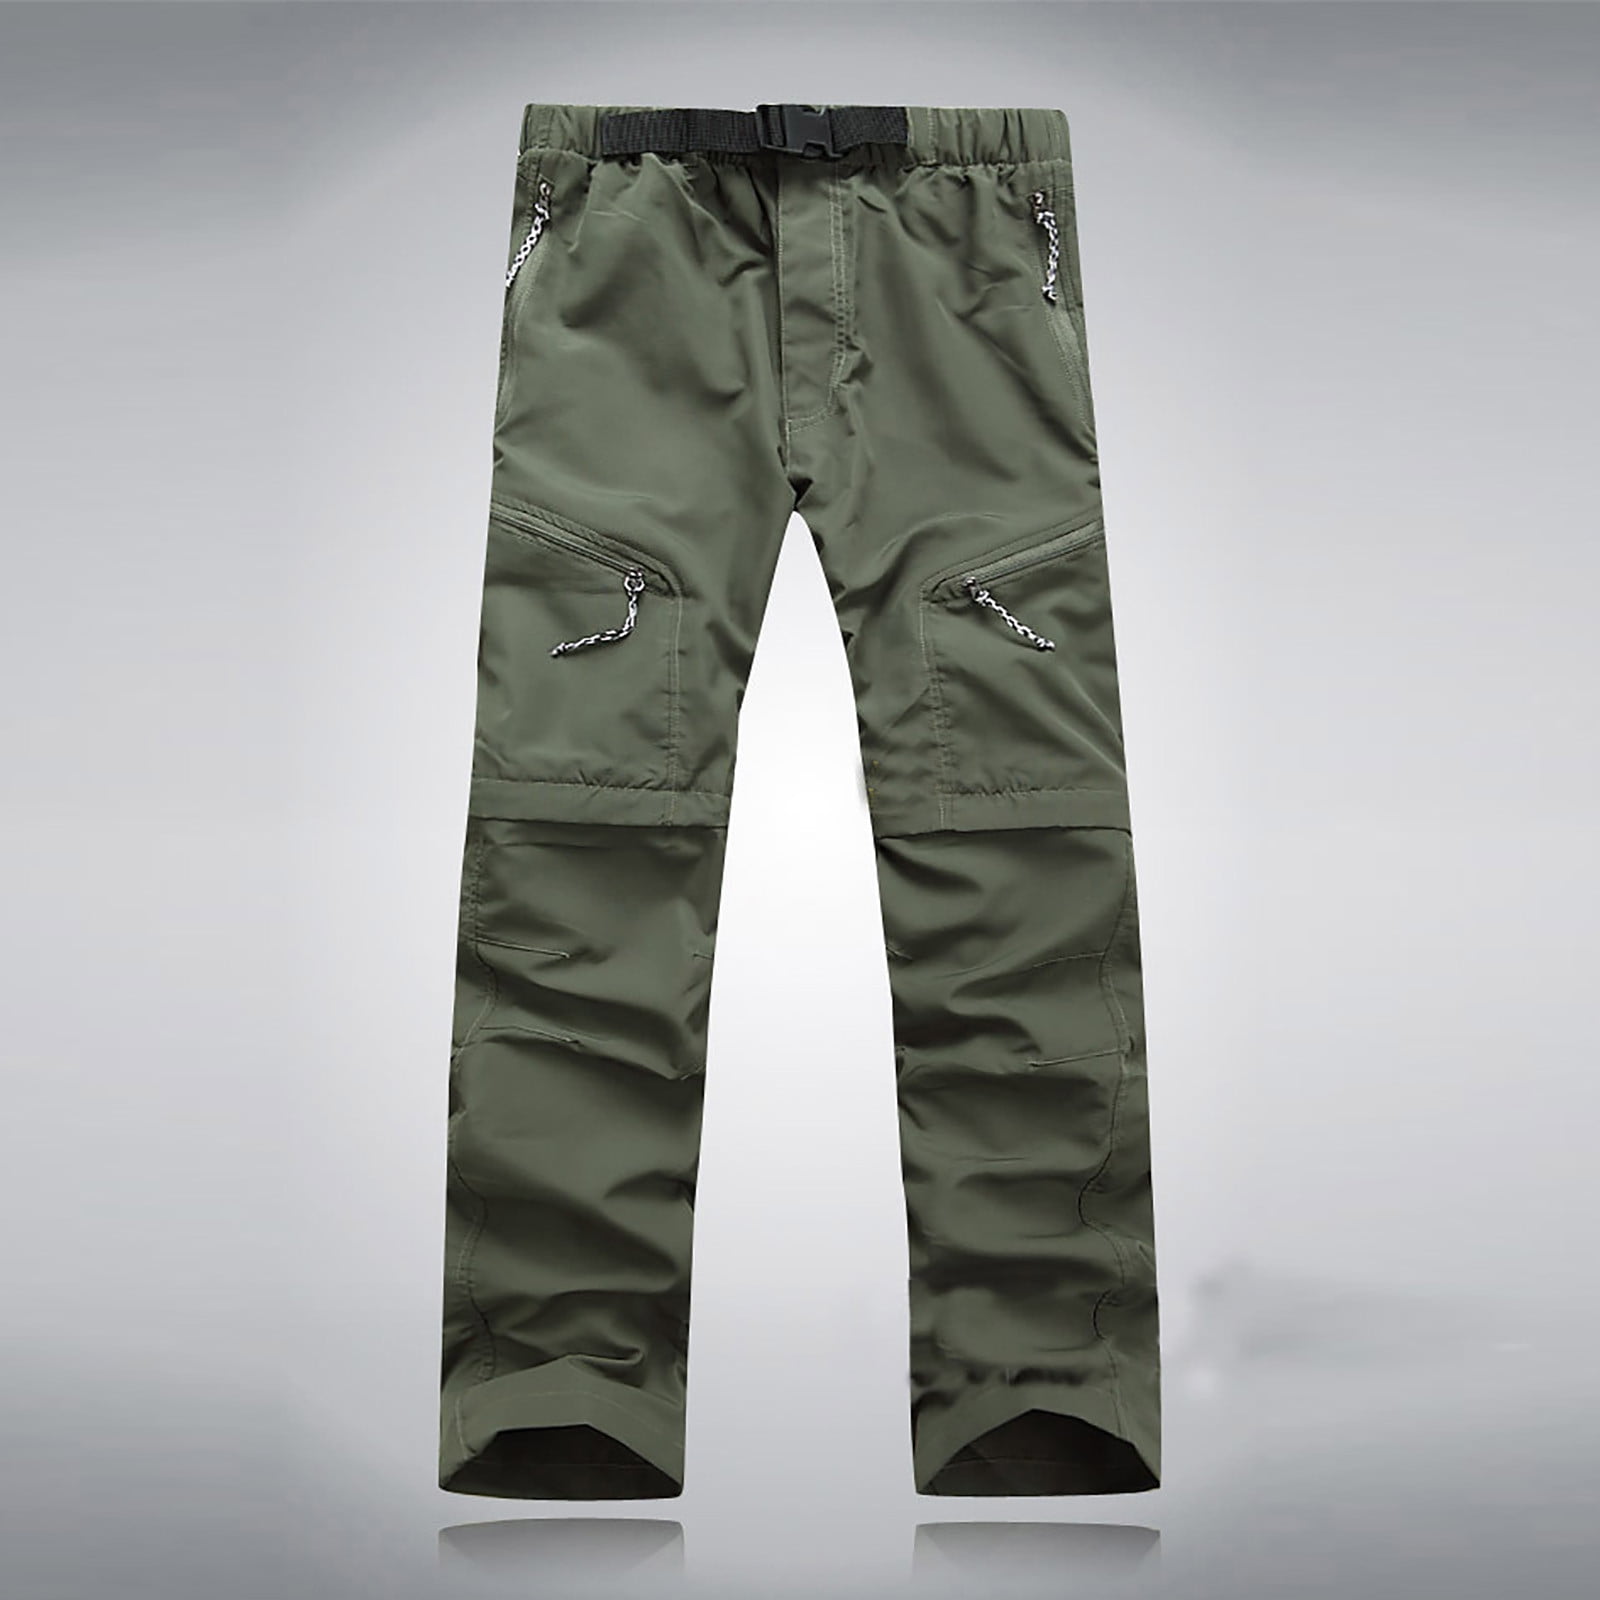 ZXHACSJ Men's Pants Cotton Classic Cargo Pant Multi Pocket Casual Work  Pants Removable Army Green XXL